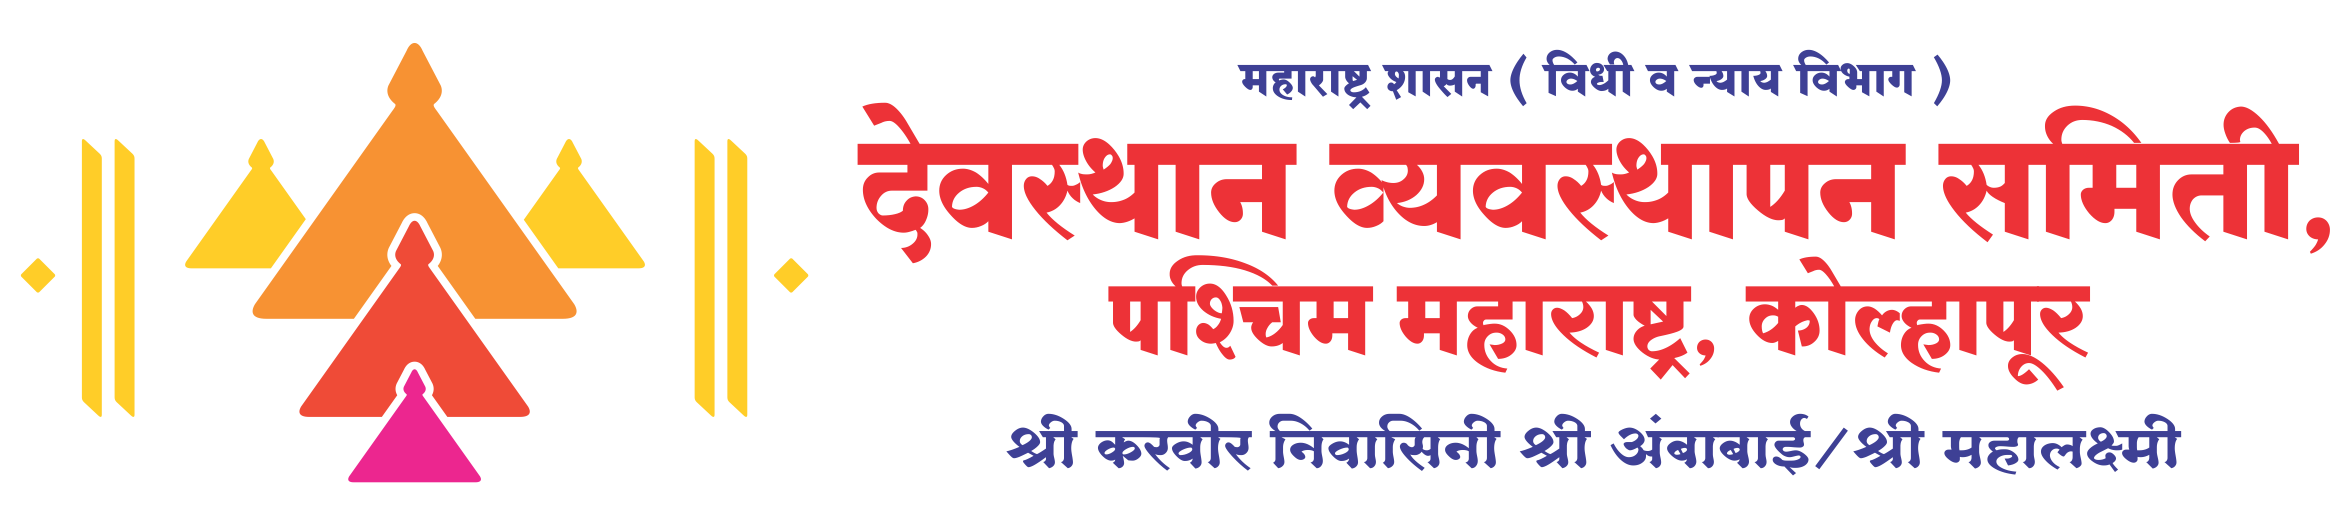 Mauli Ambabaicha Karuya Jayghosh - Ambabai Marathi Song | Devotional Songs  - YouTube